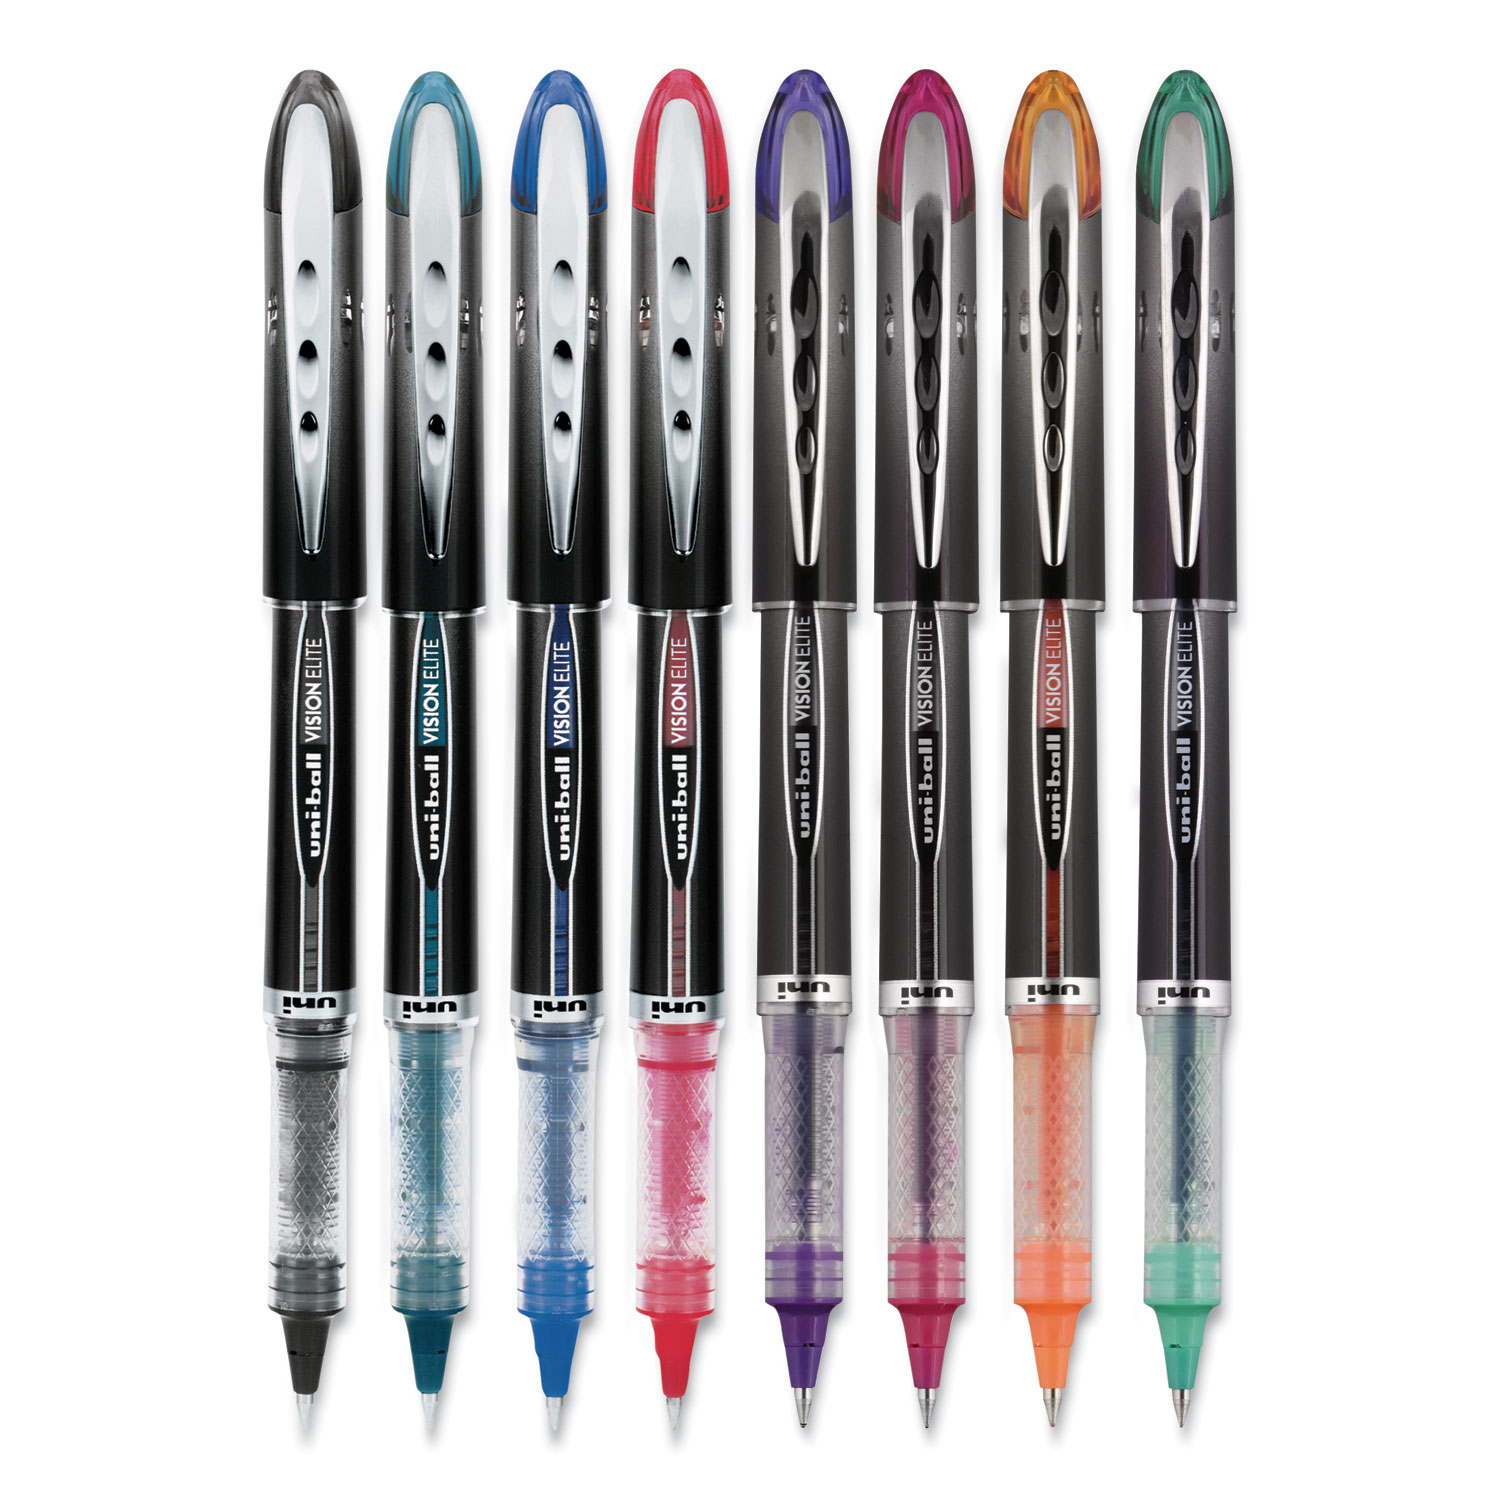 uni-ball Vision Stick Roller Ball Pen Micro 0.5mm Black Ink 12pk for sale online